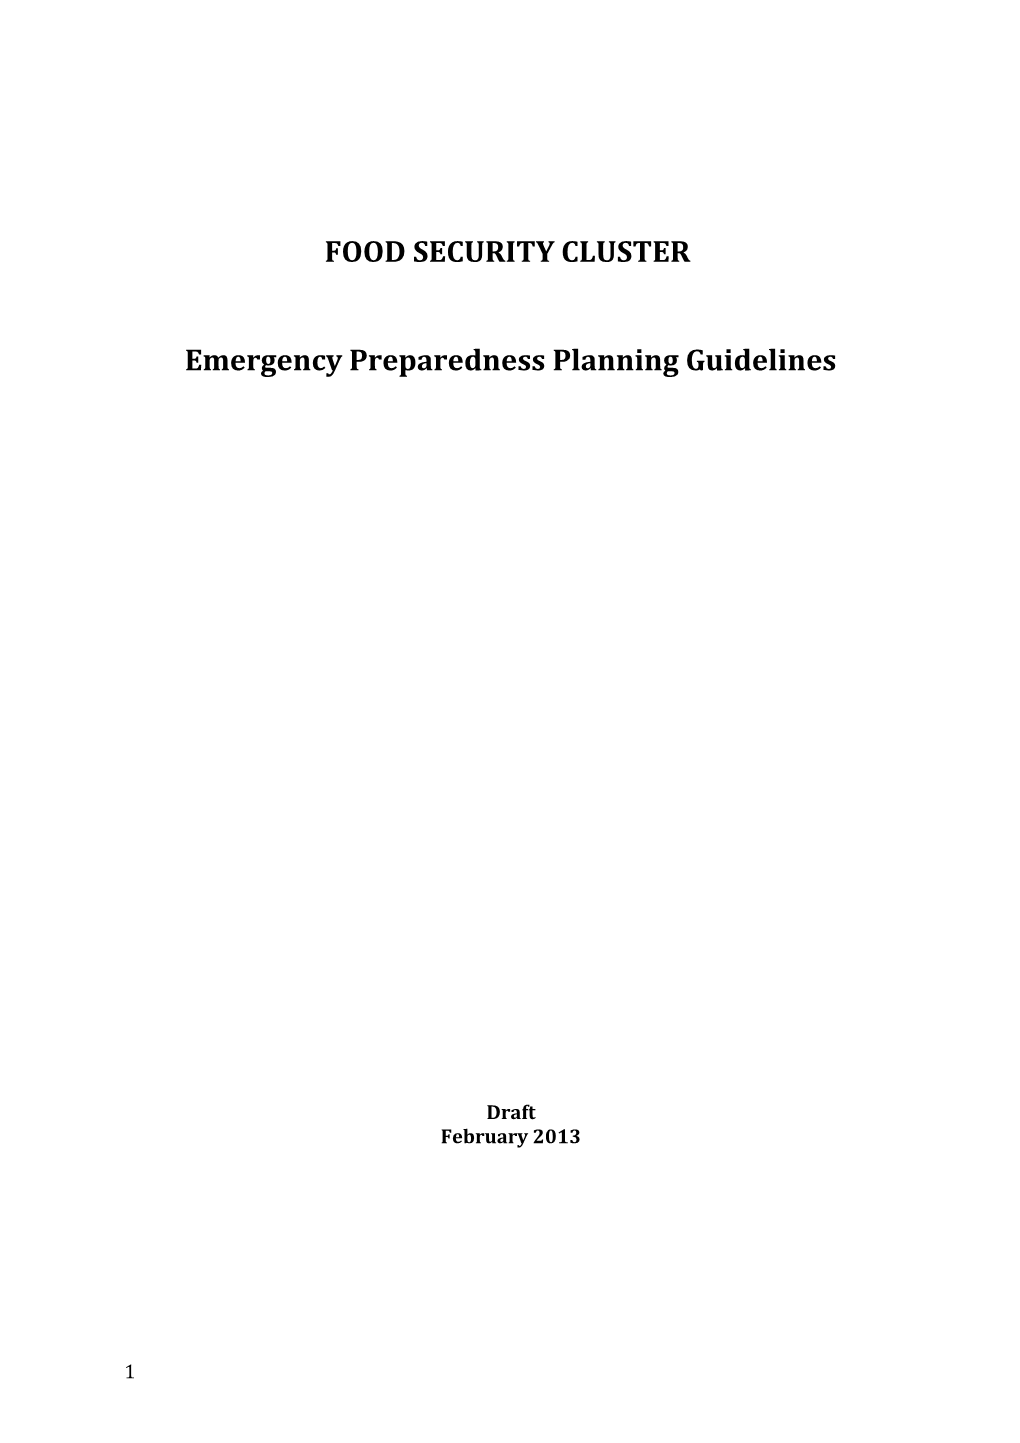 Emergency Preparedness Planning Guidelines